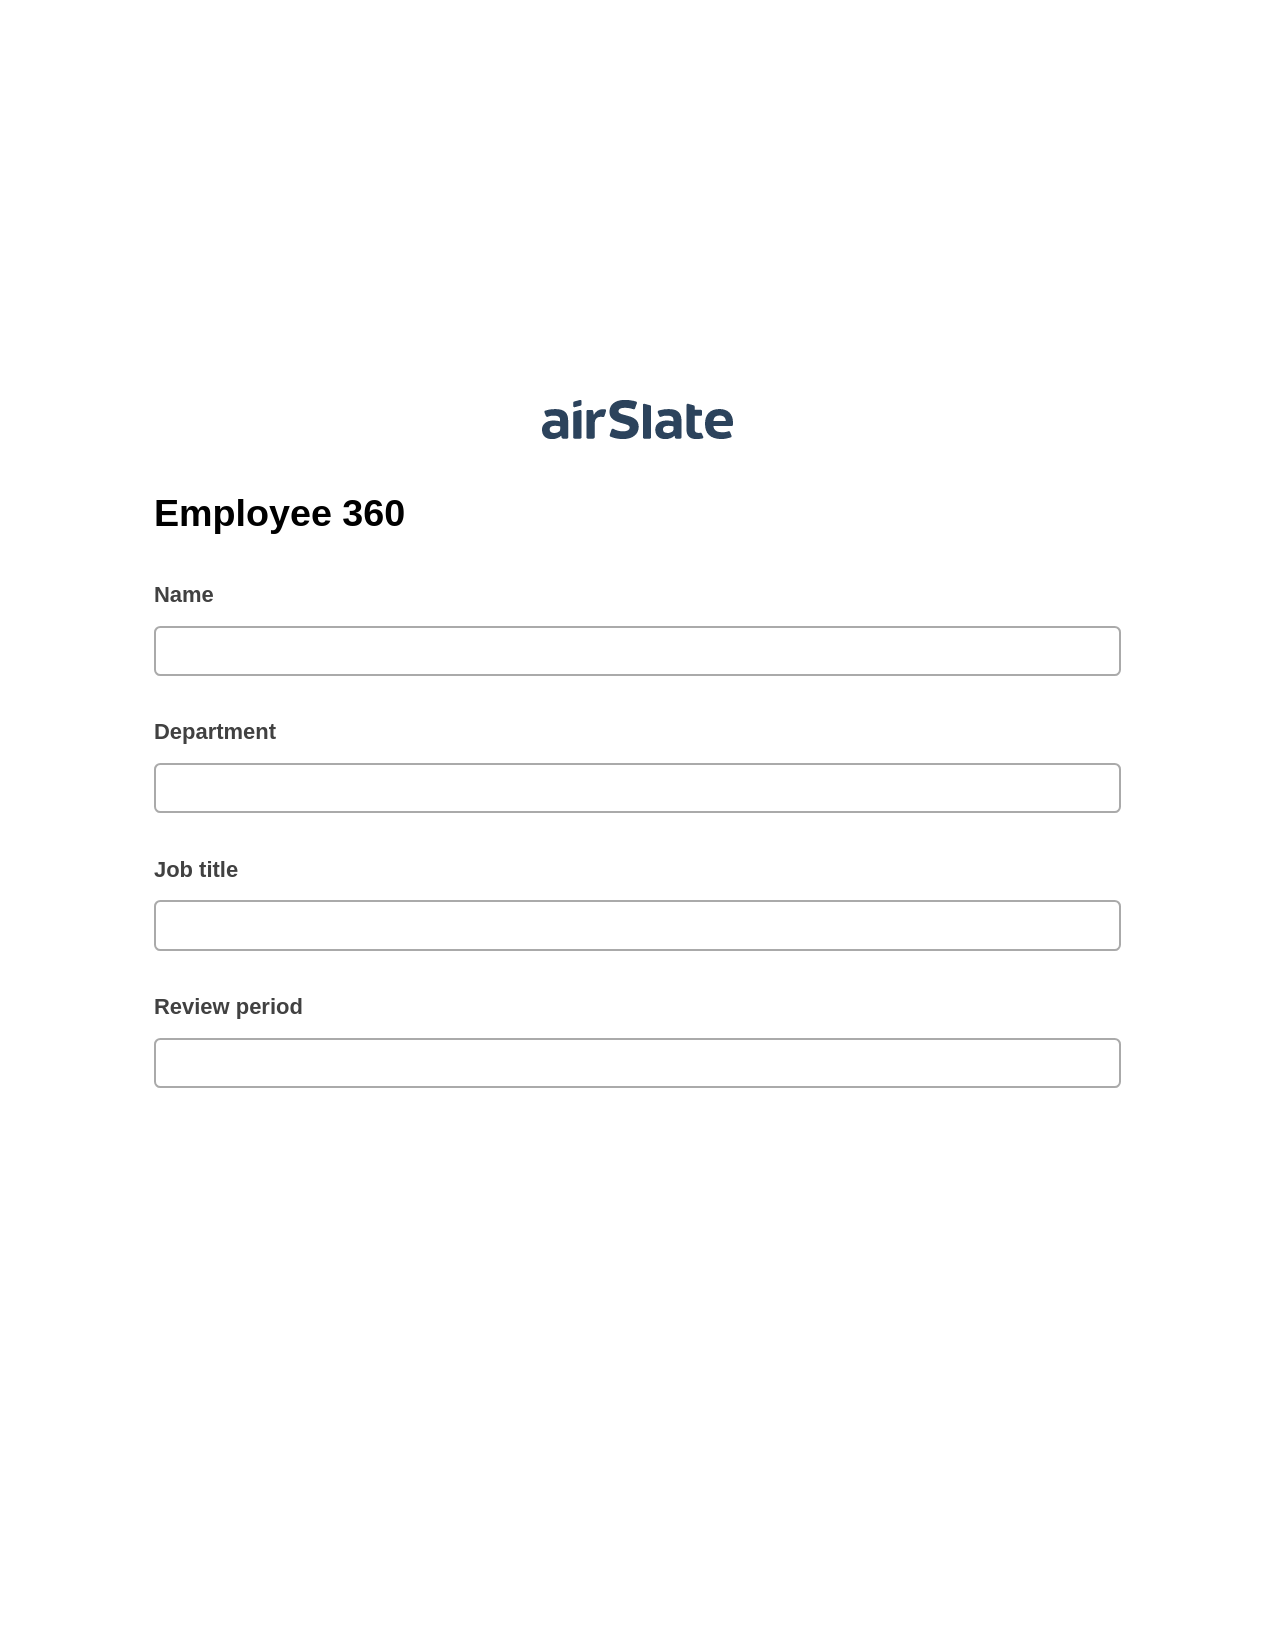 Multirole Employee 360 Pre-fill from Salesforce Records Bot, Invoke Salesforce Process Bot, Archive to Box Bot